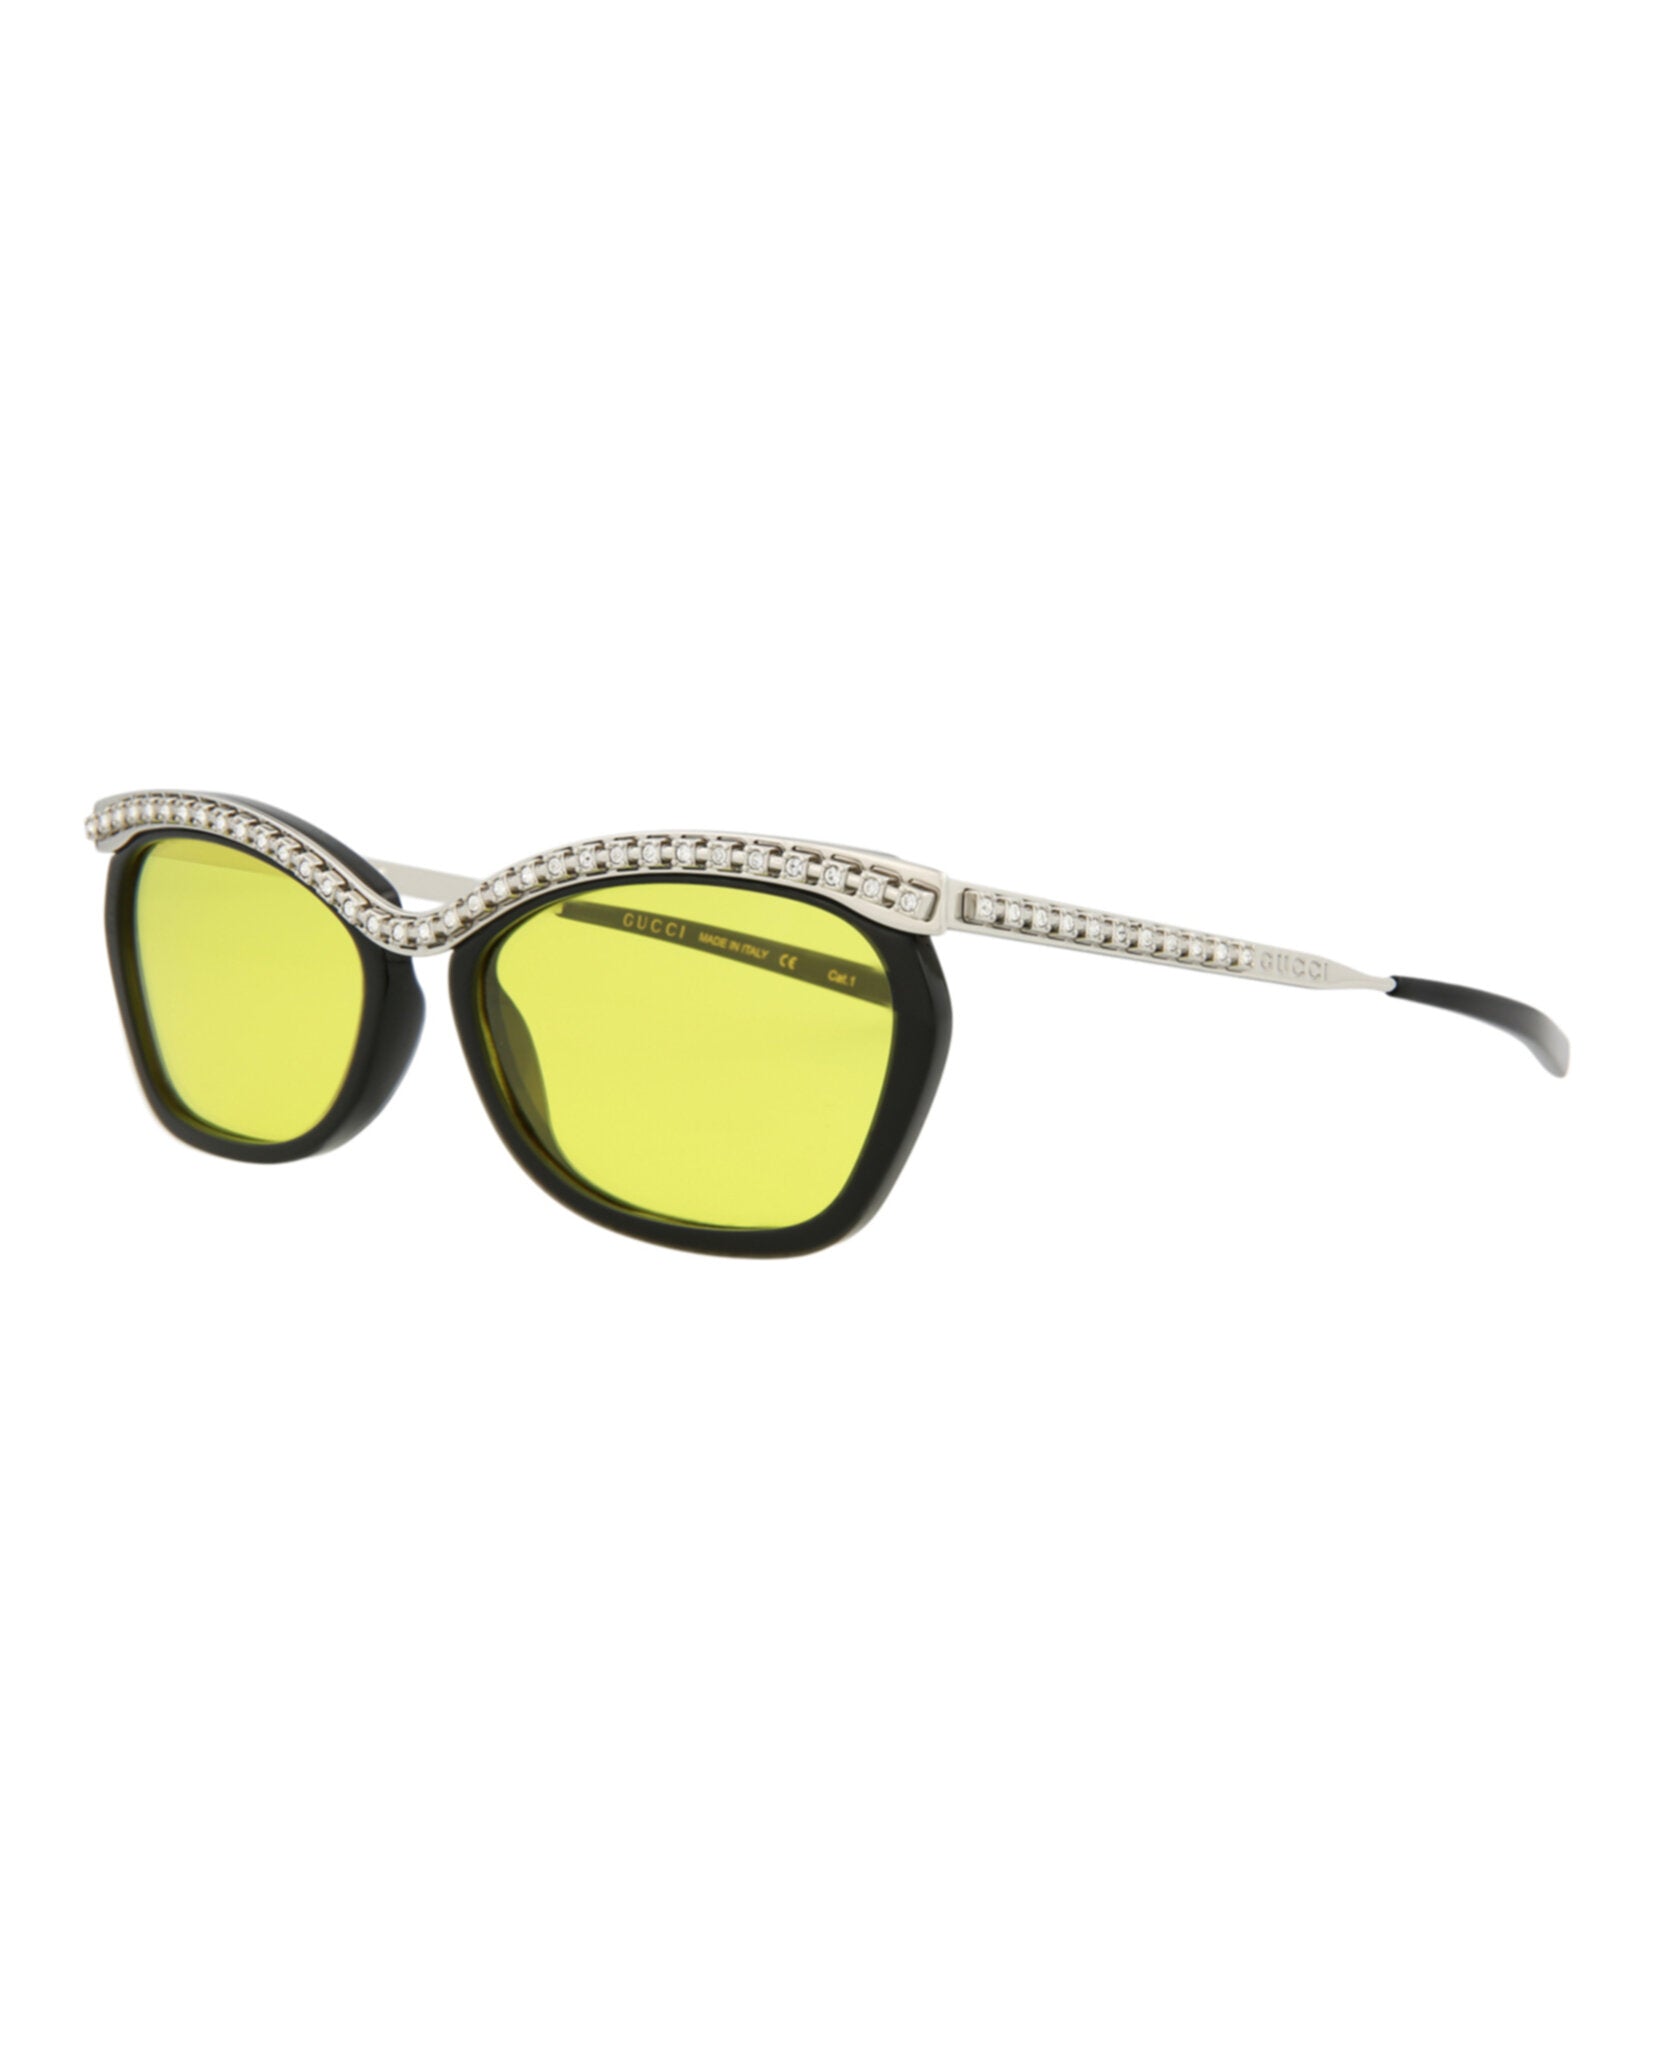 title:Gucci Square-Frame Acetate Sunglasses, style # GG0617S-30008121003;color:Black Silver Yellow